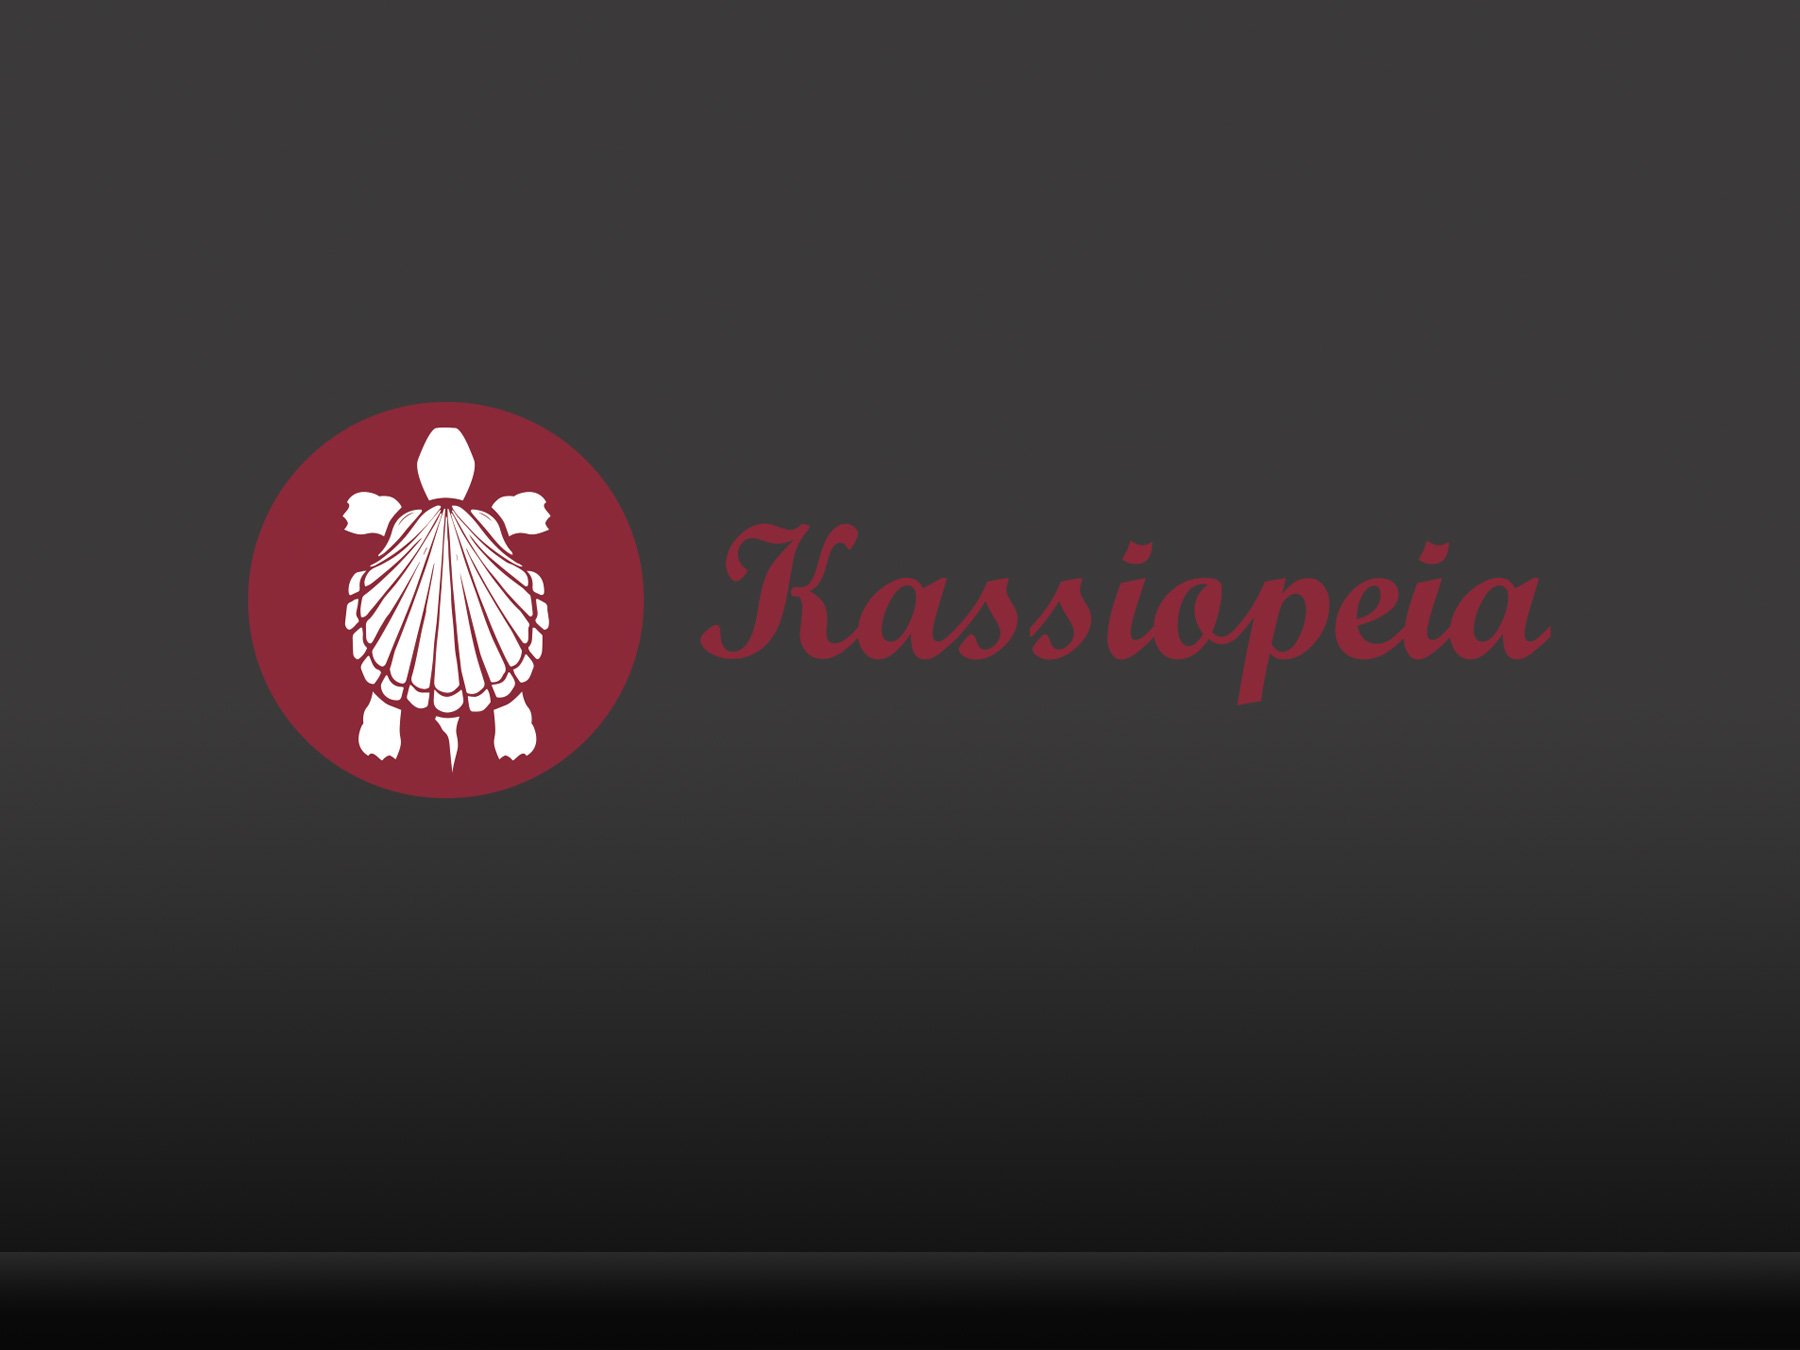 Kassiopeia - Café